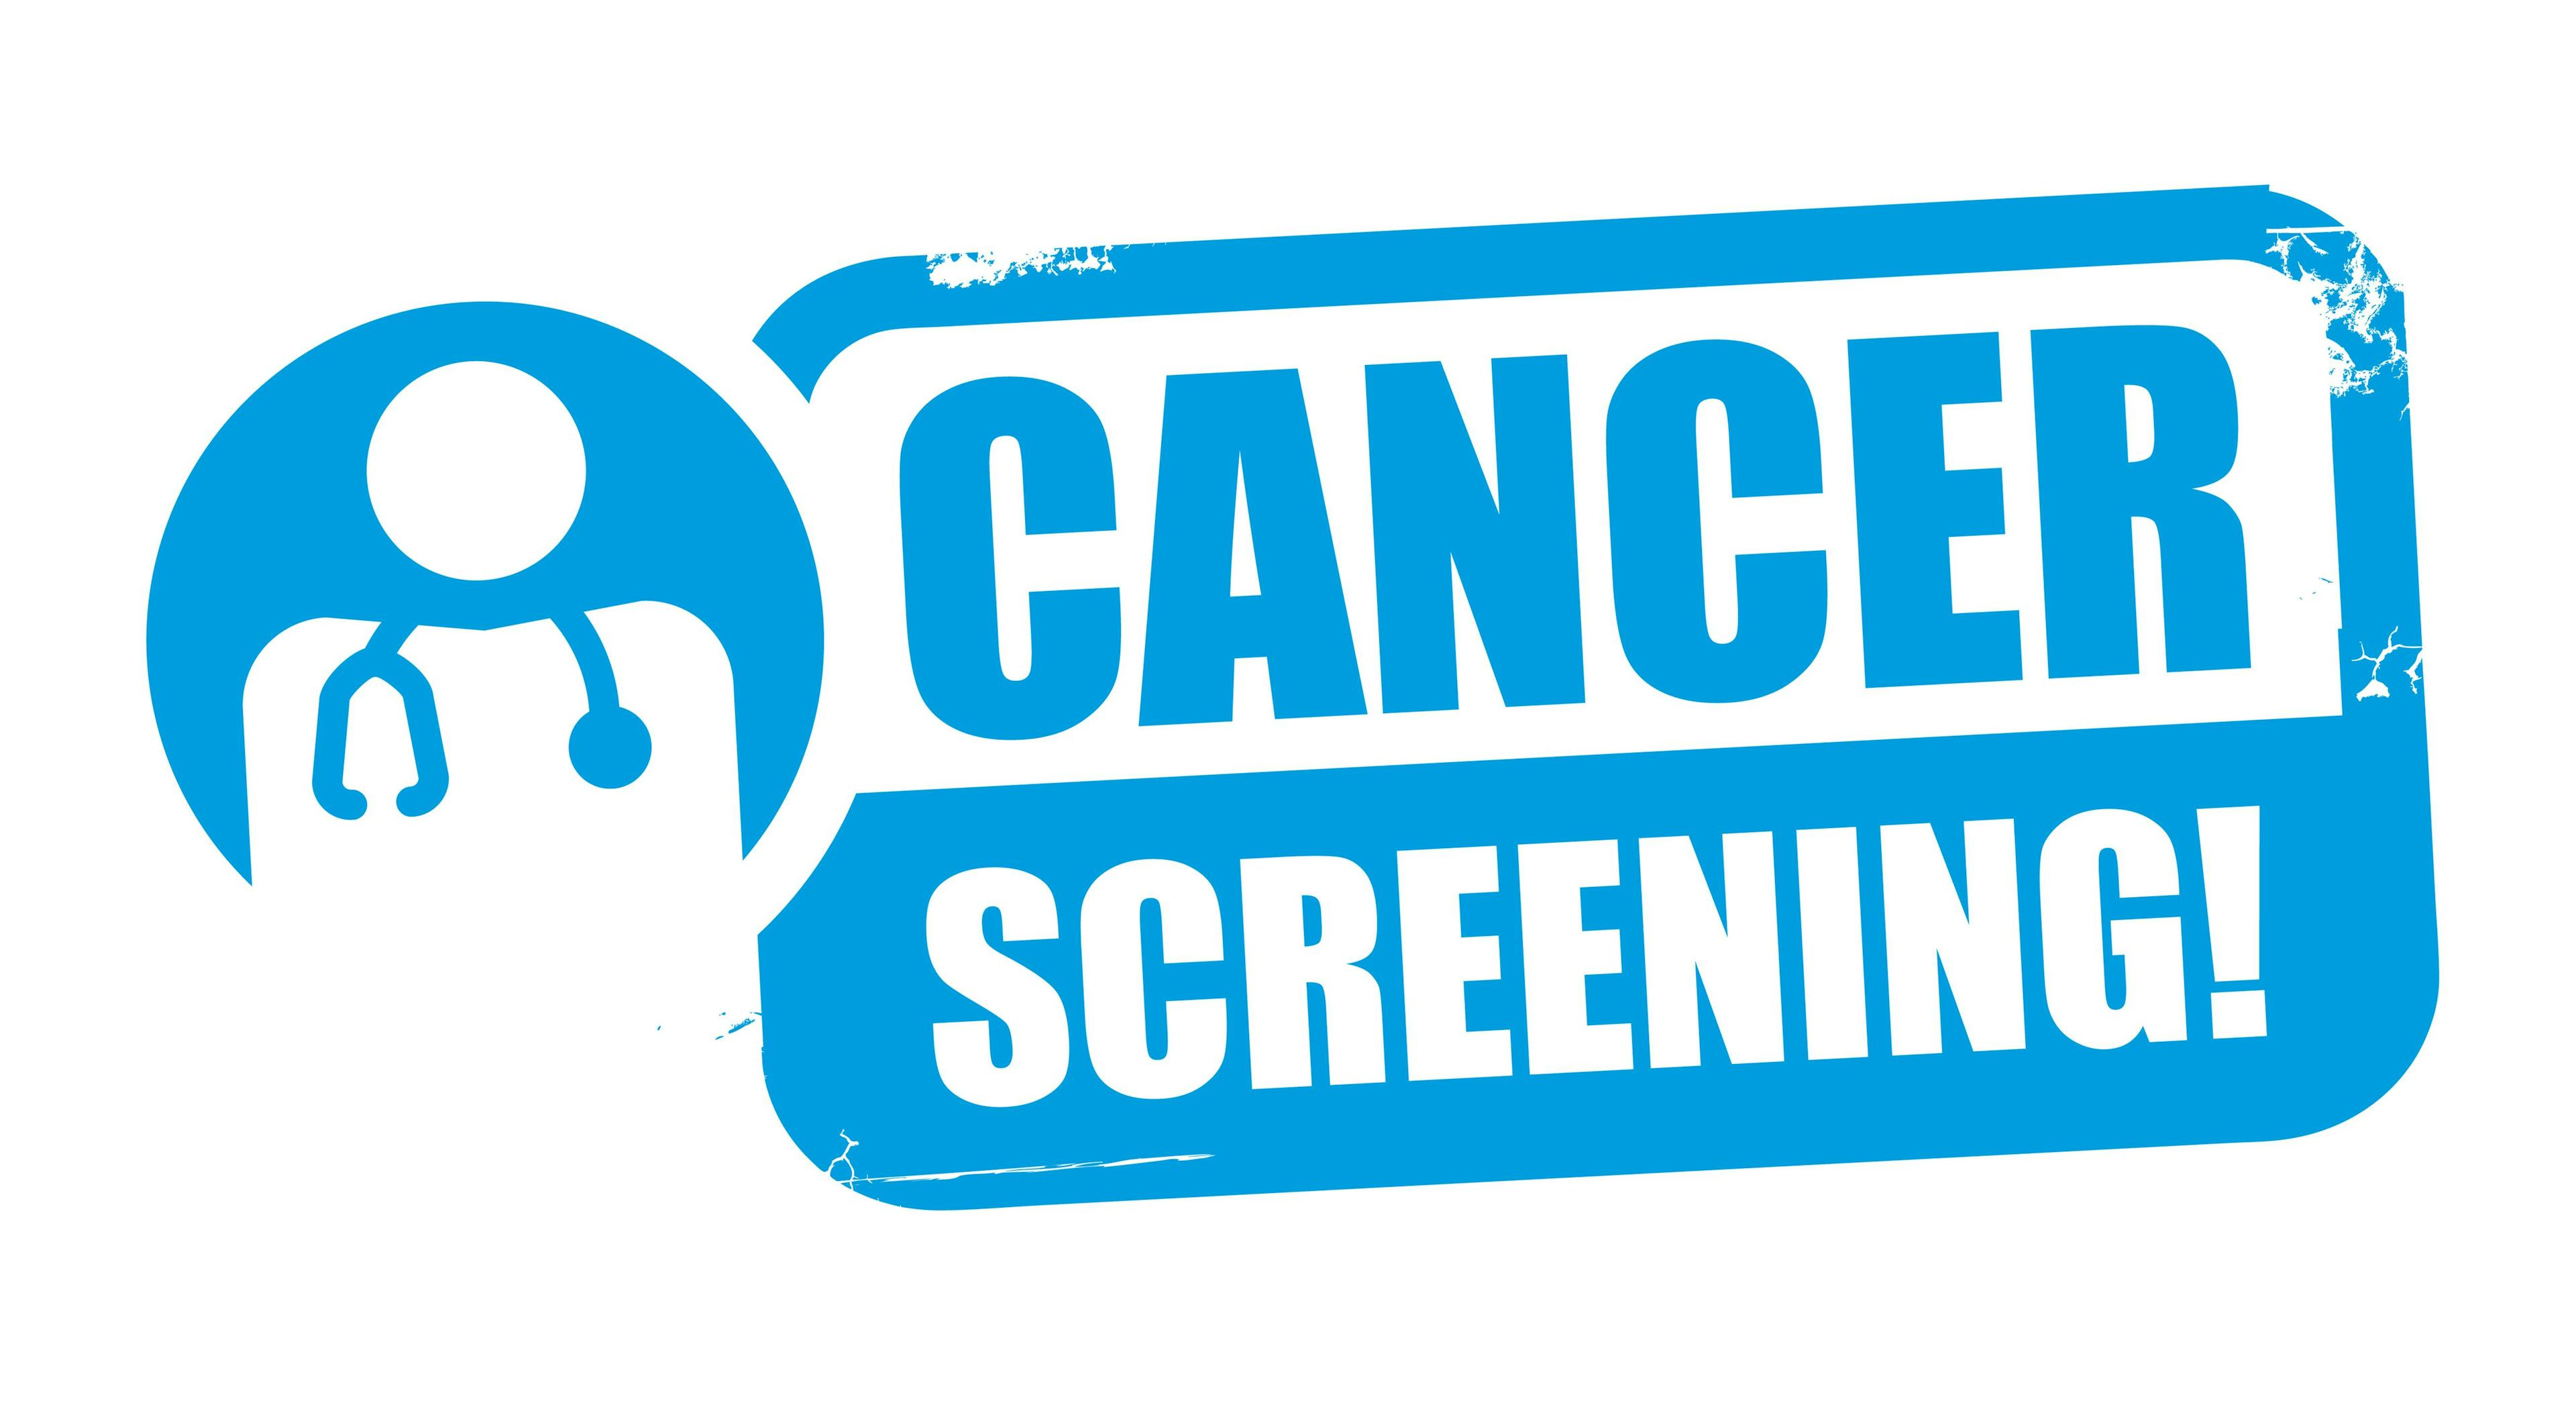 Older Americans disagree with cancer screening guidelines: ©Truefflepix - stock.adobe.com